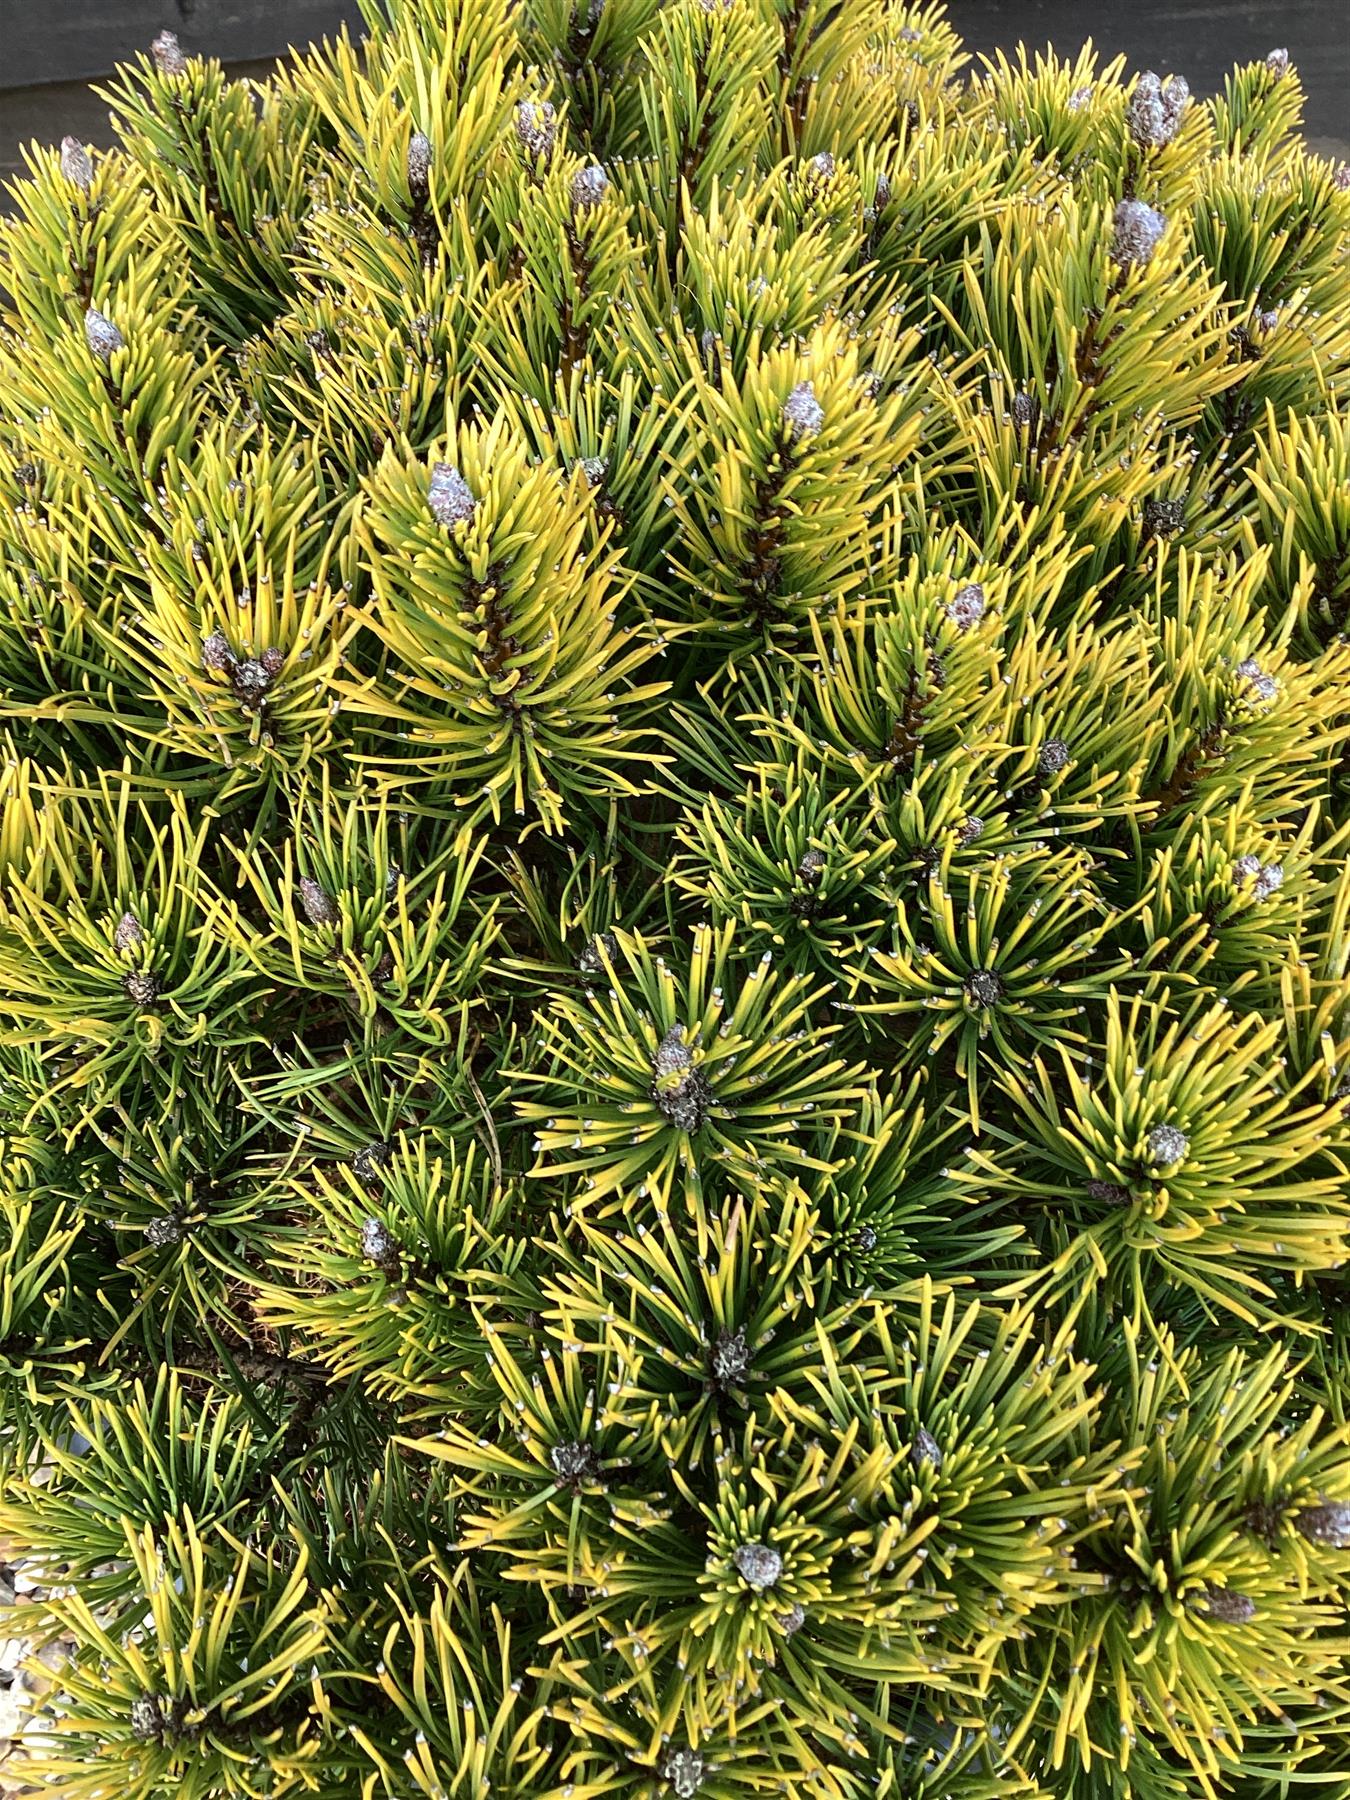 Pinus mugo 'Carsten's Wintergold' - Height 75cm - Width 40-50cm - 25lt